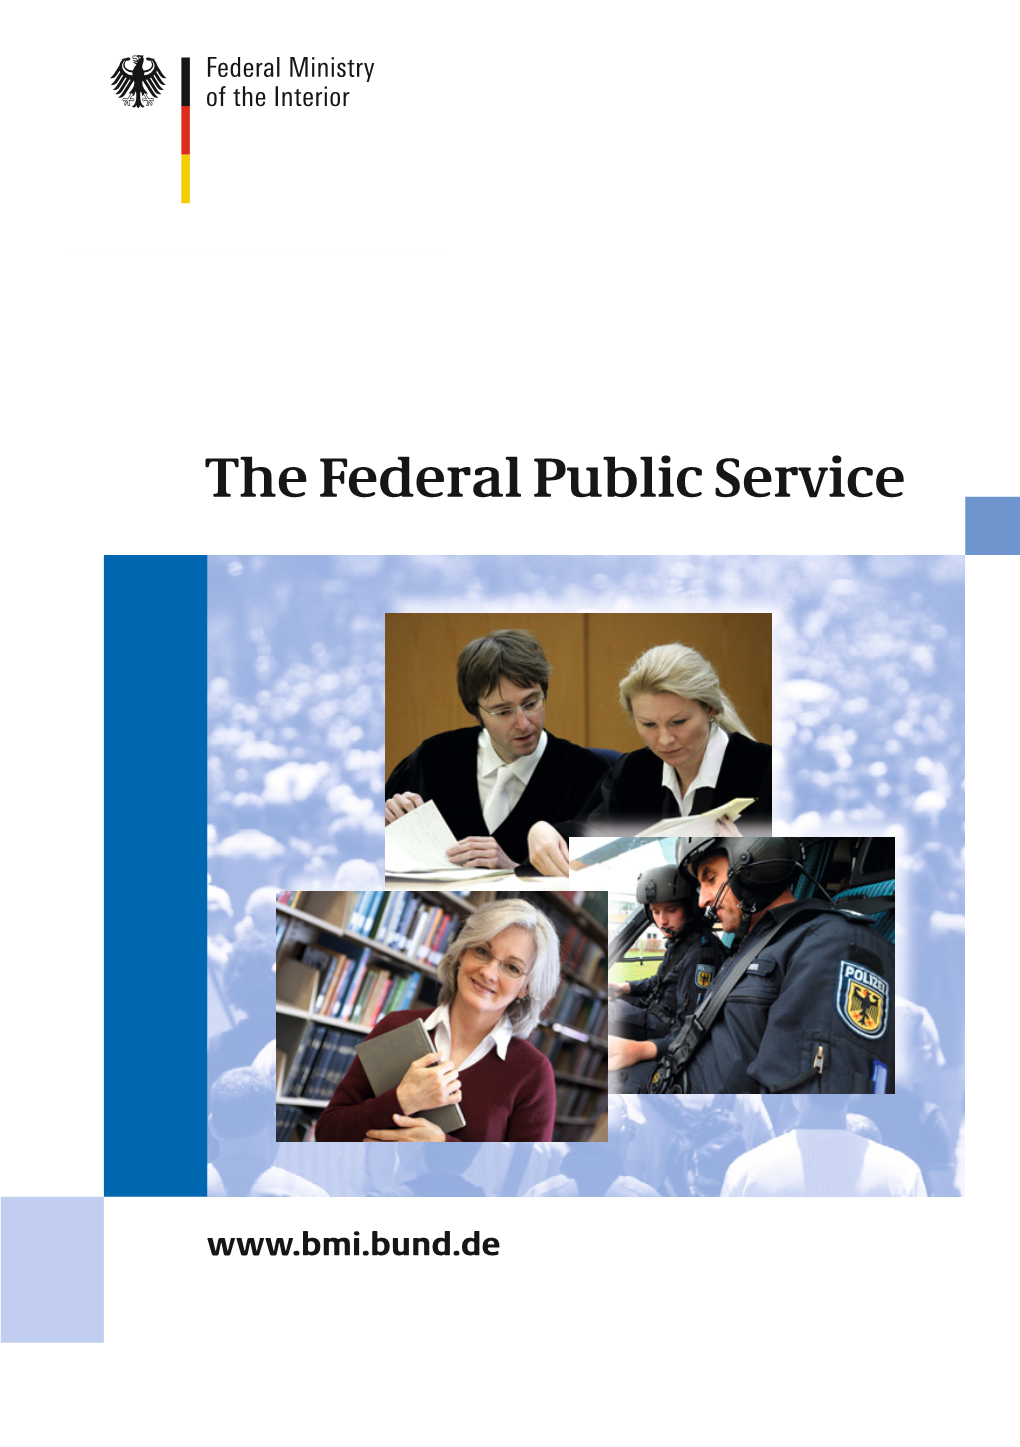 The Federal Public Service